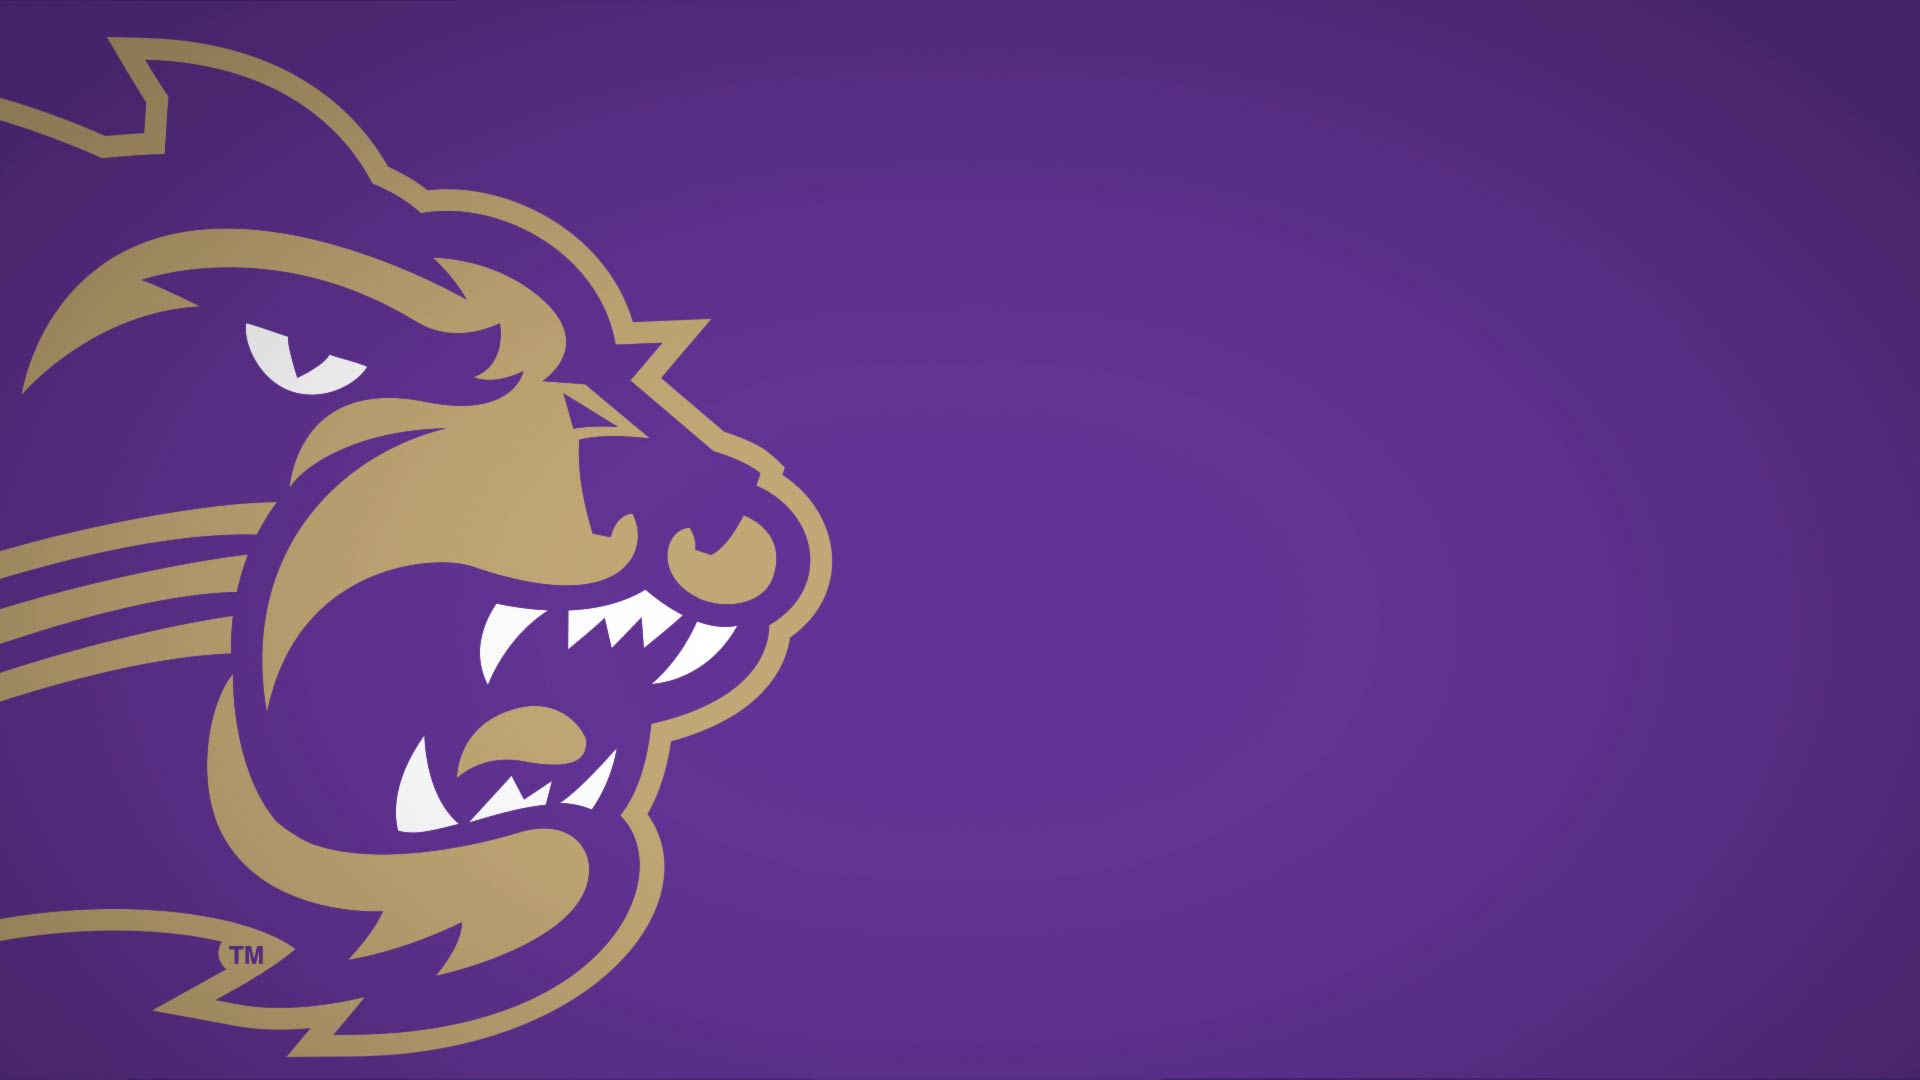 WCU Cat Head logo on Purple